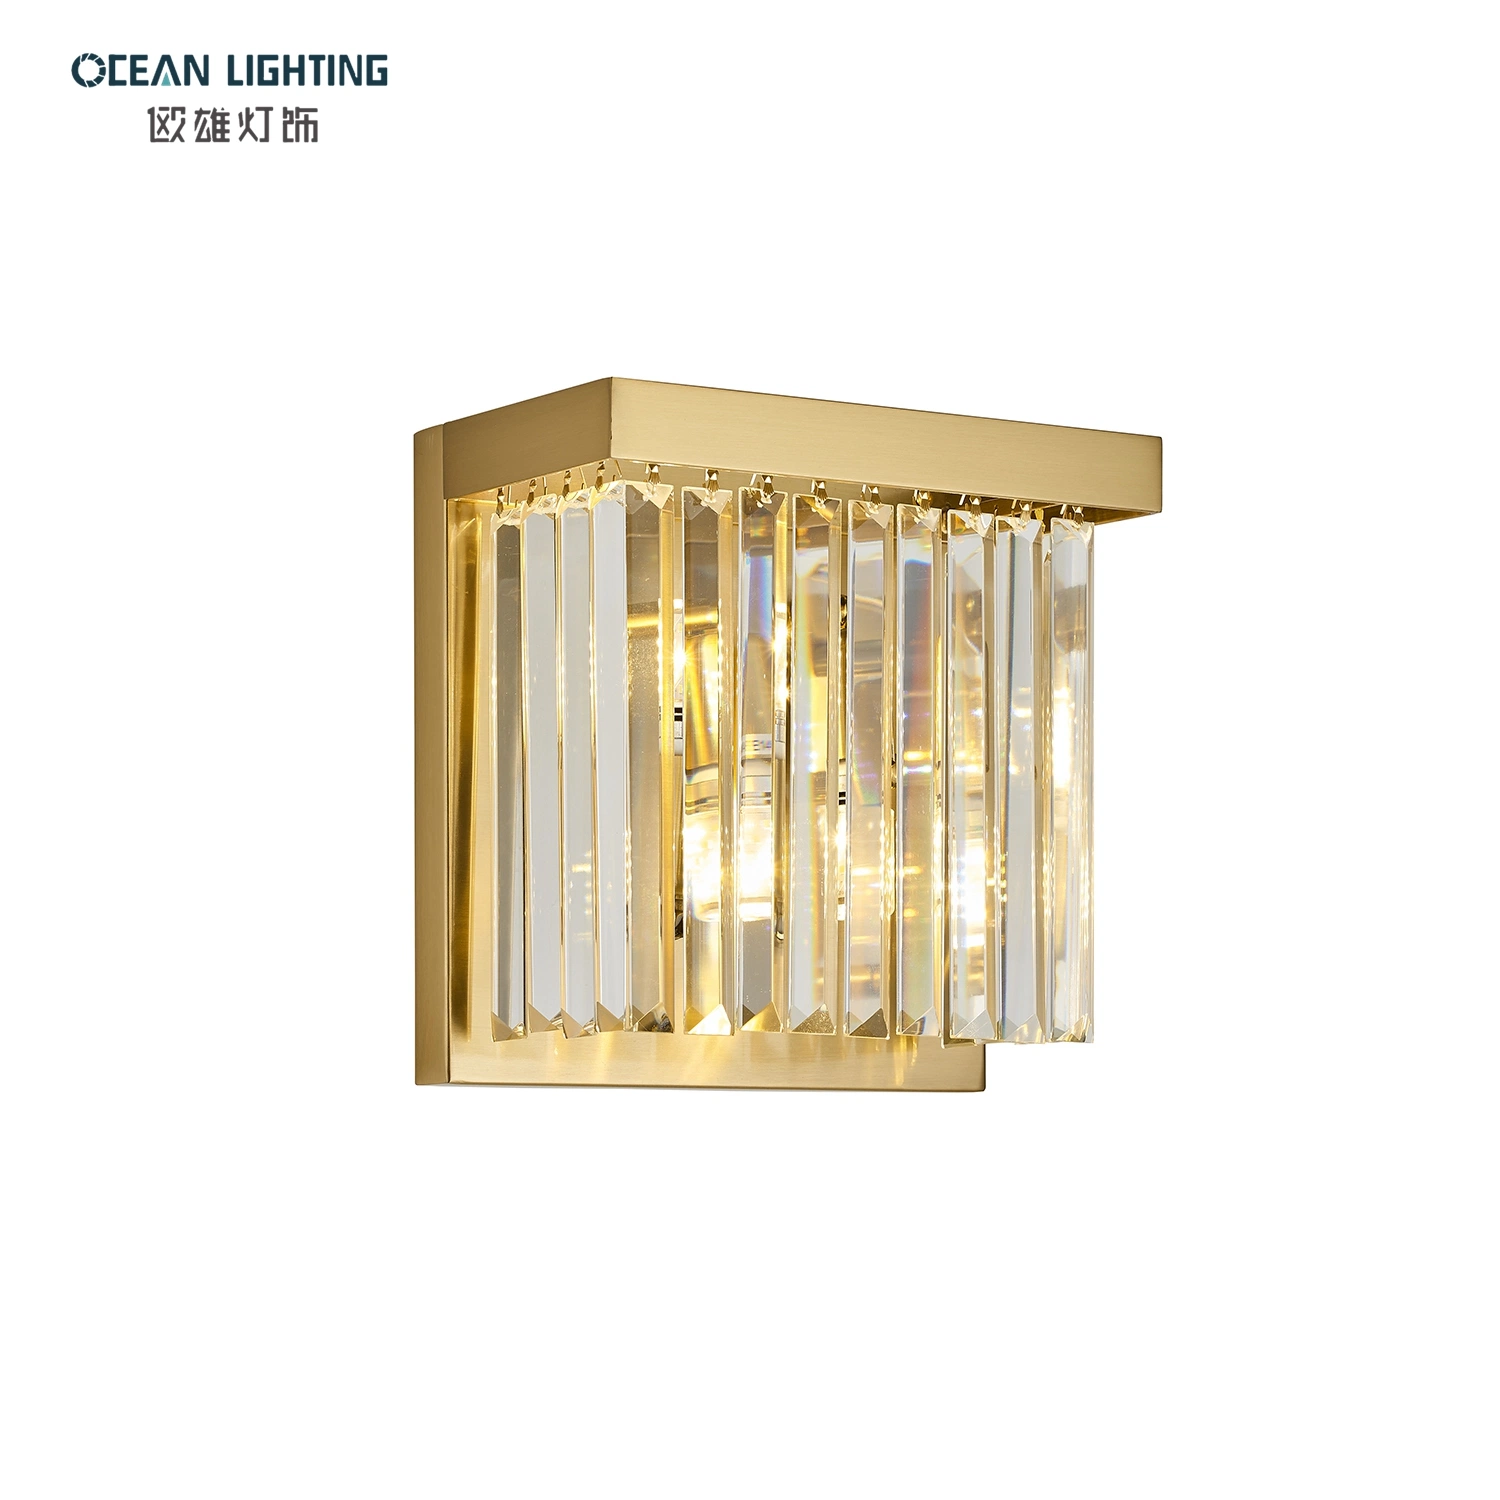 Ocean Lighting Moderninterior Lighting Hängeleuchter Hängelampen Luxus Kristall